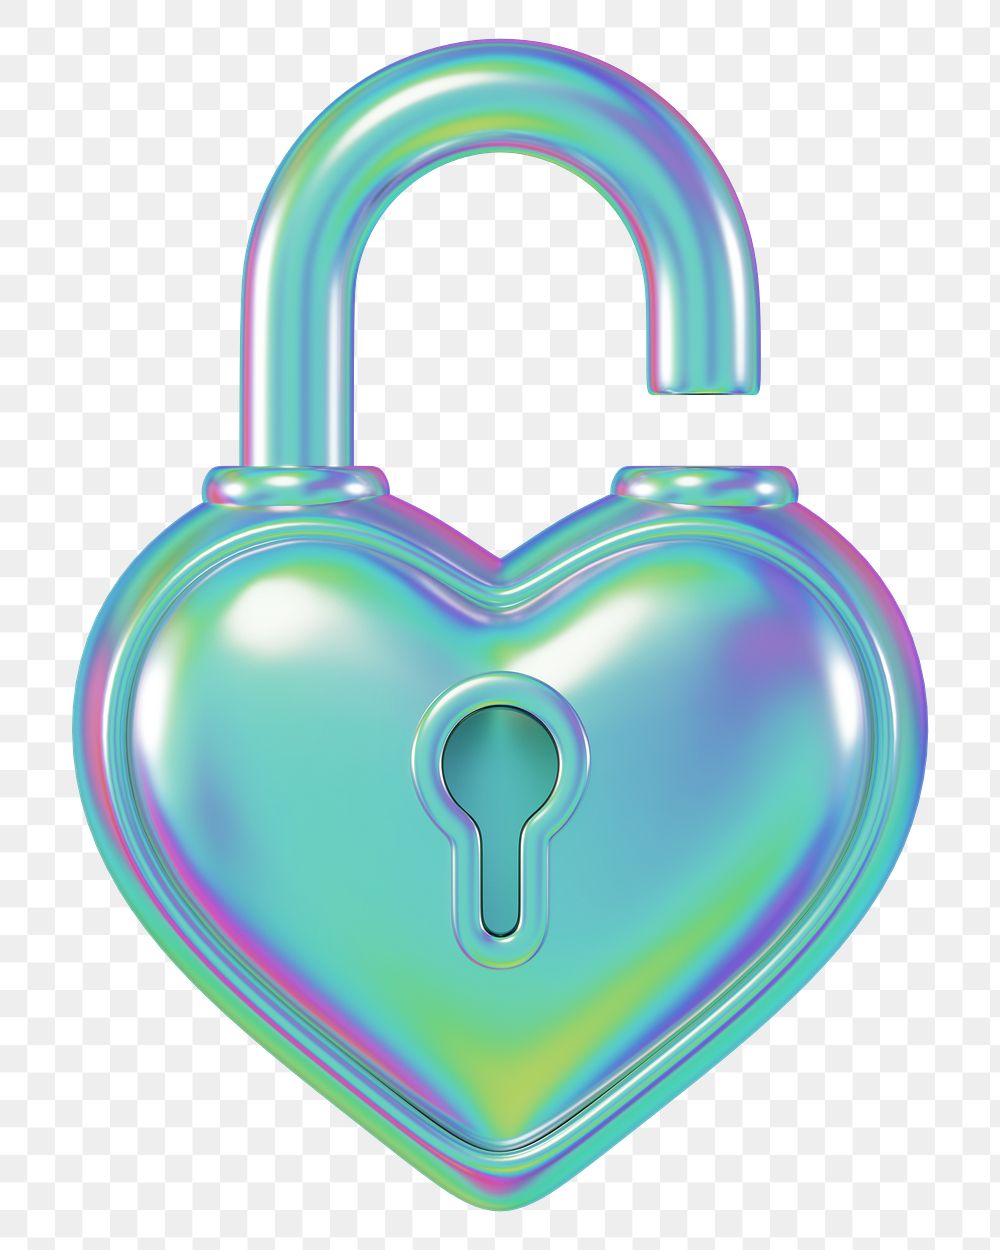 Holographic heart padlock png 3D element, transparent background